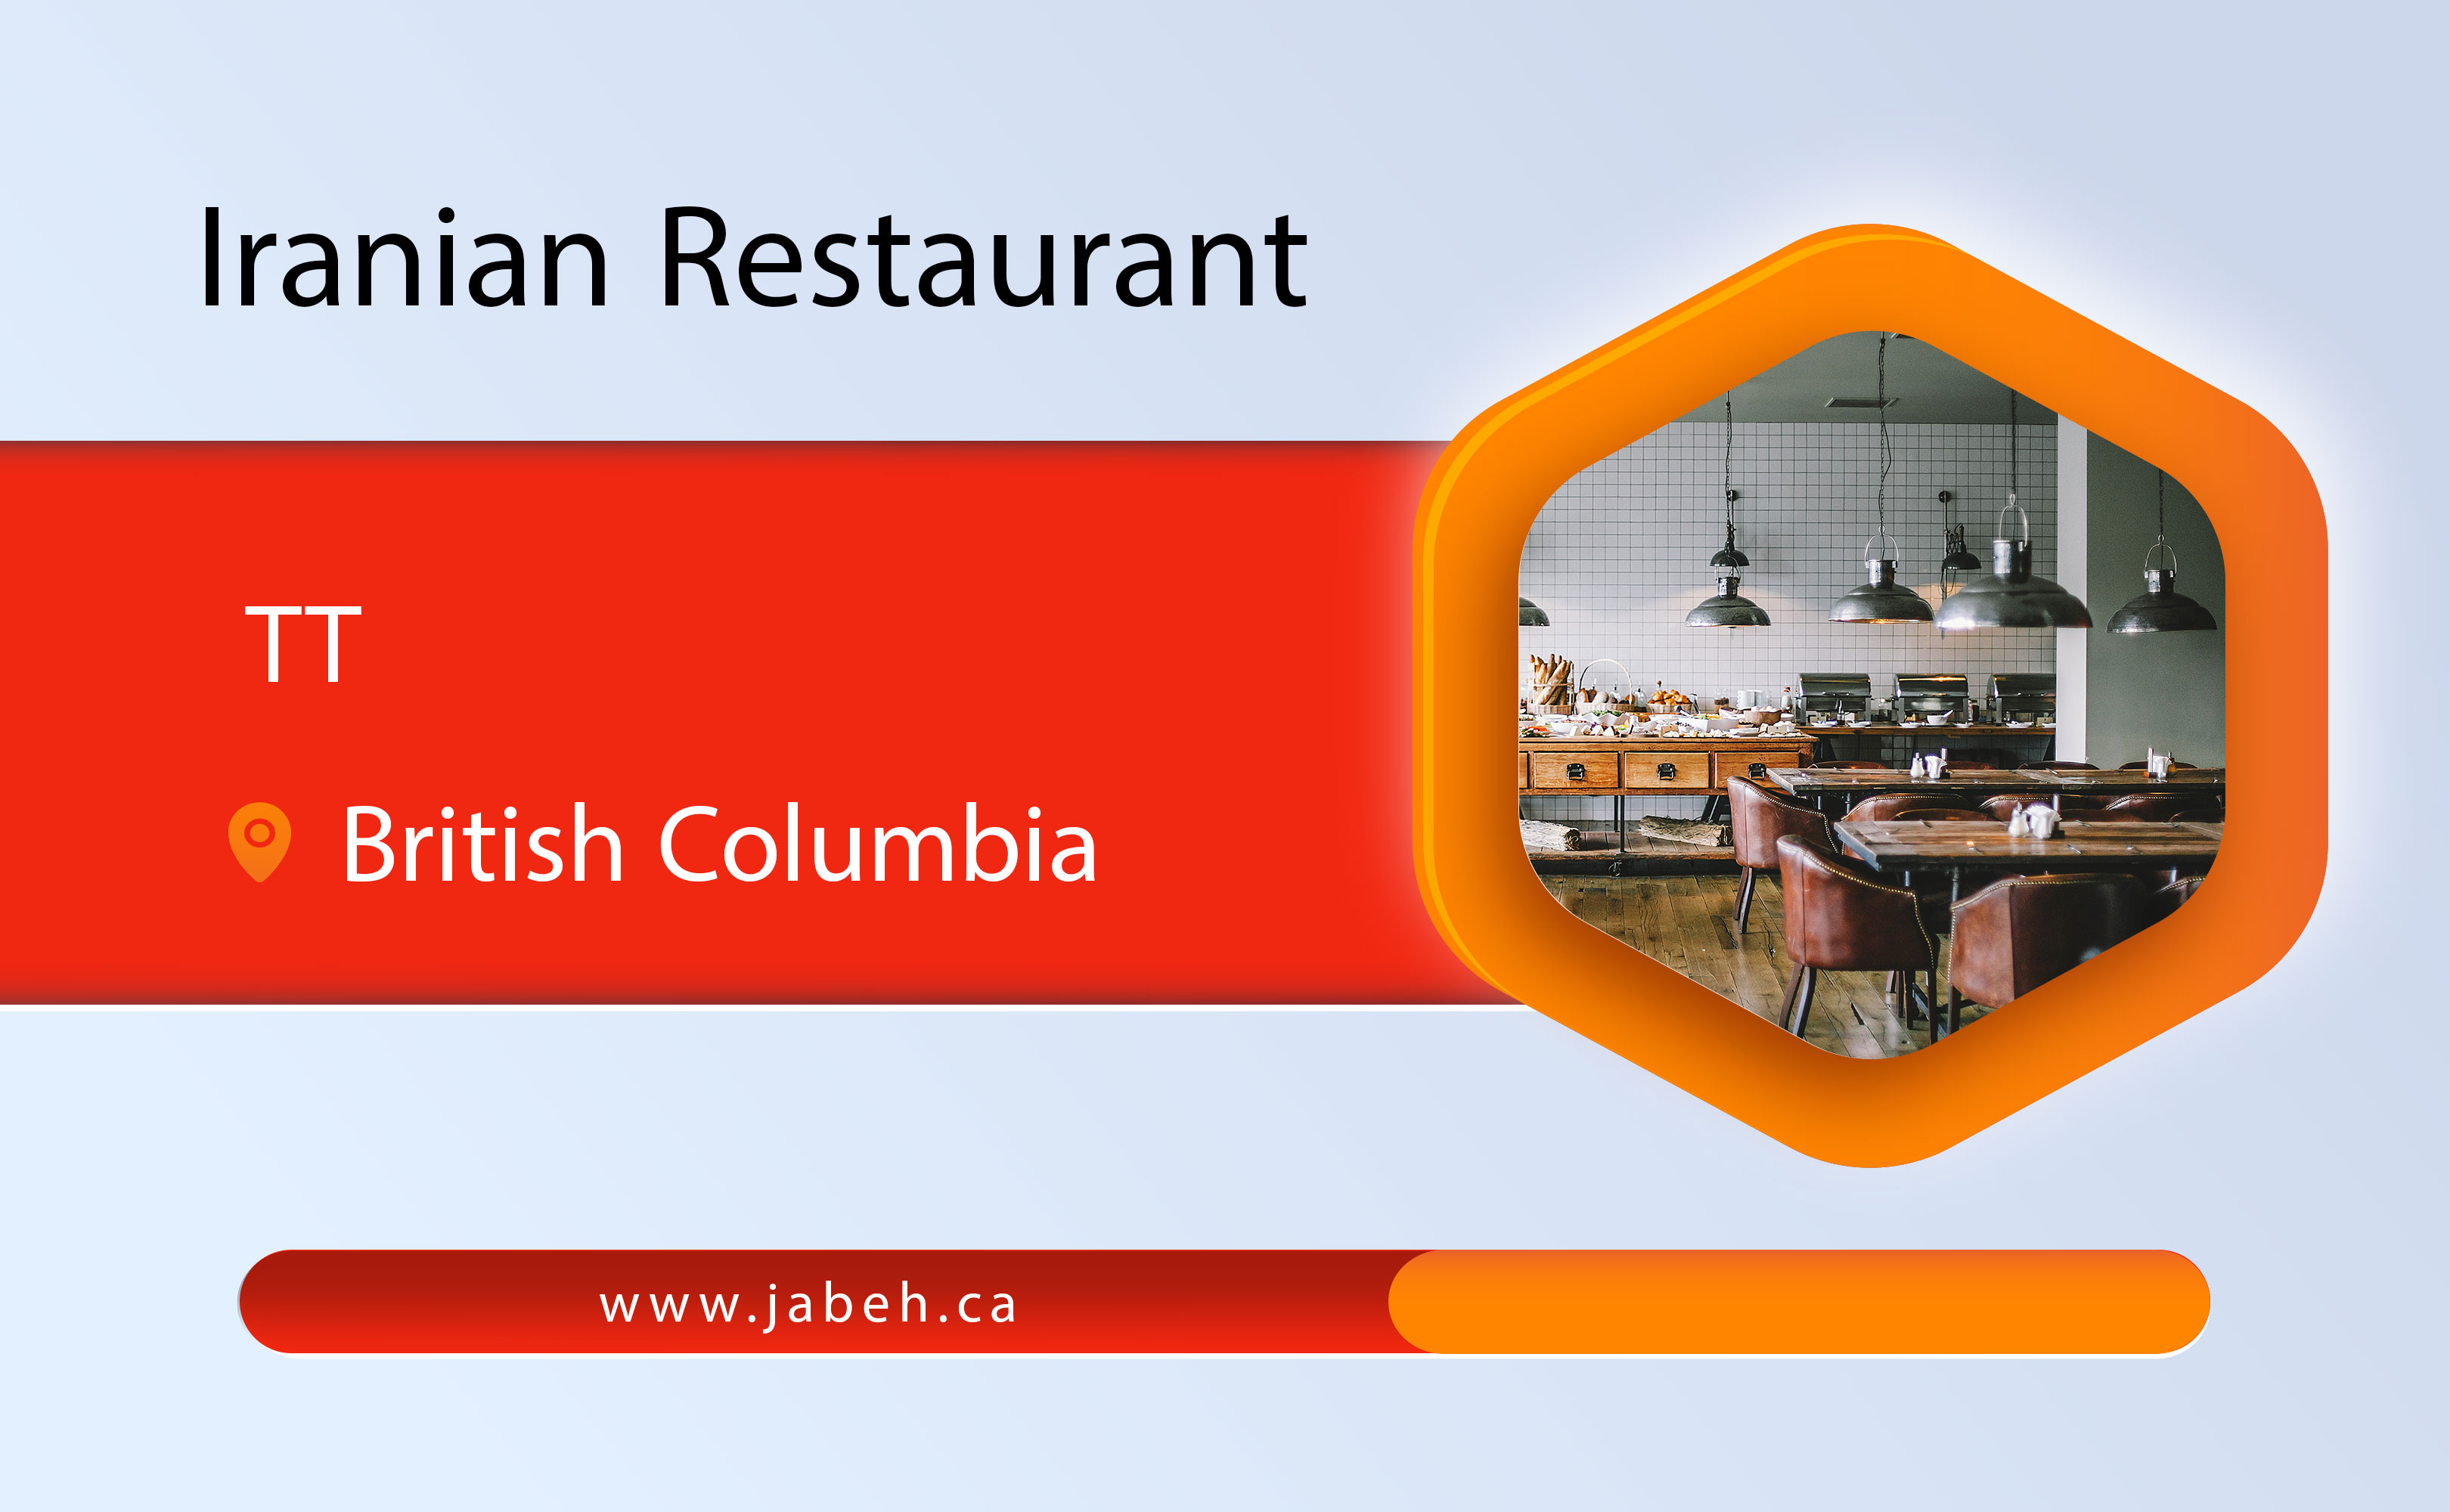 TT Iranian restaurant in British Columbia